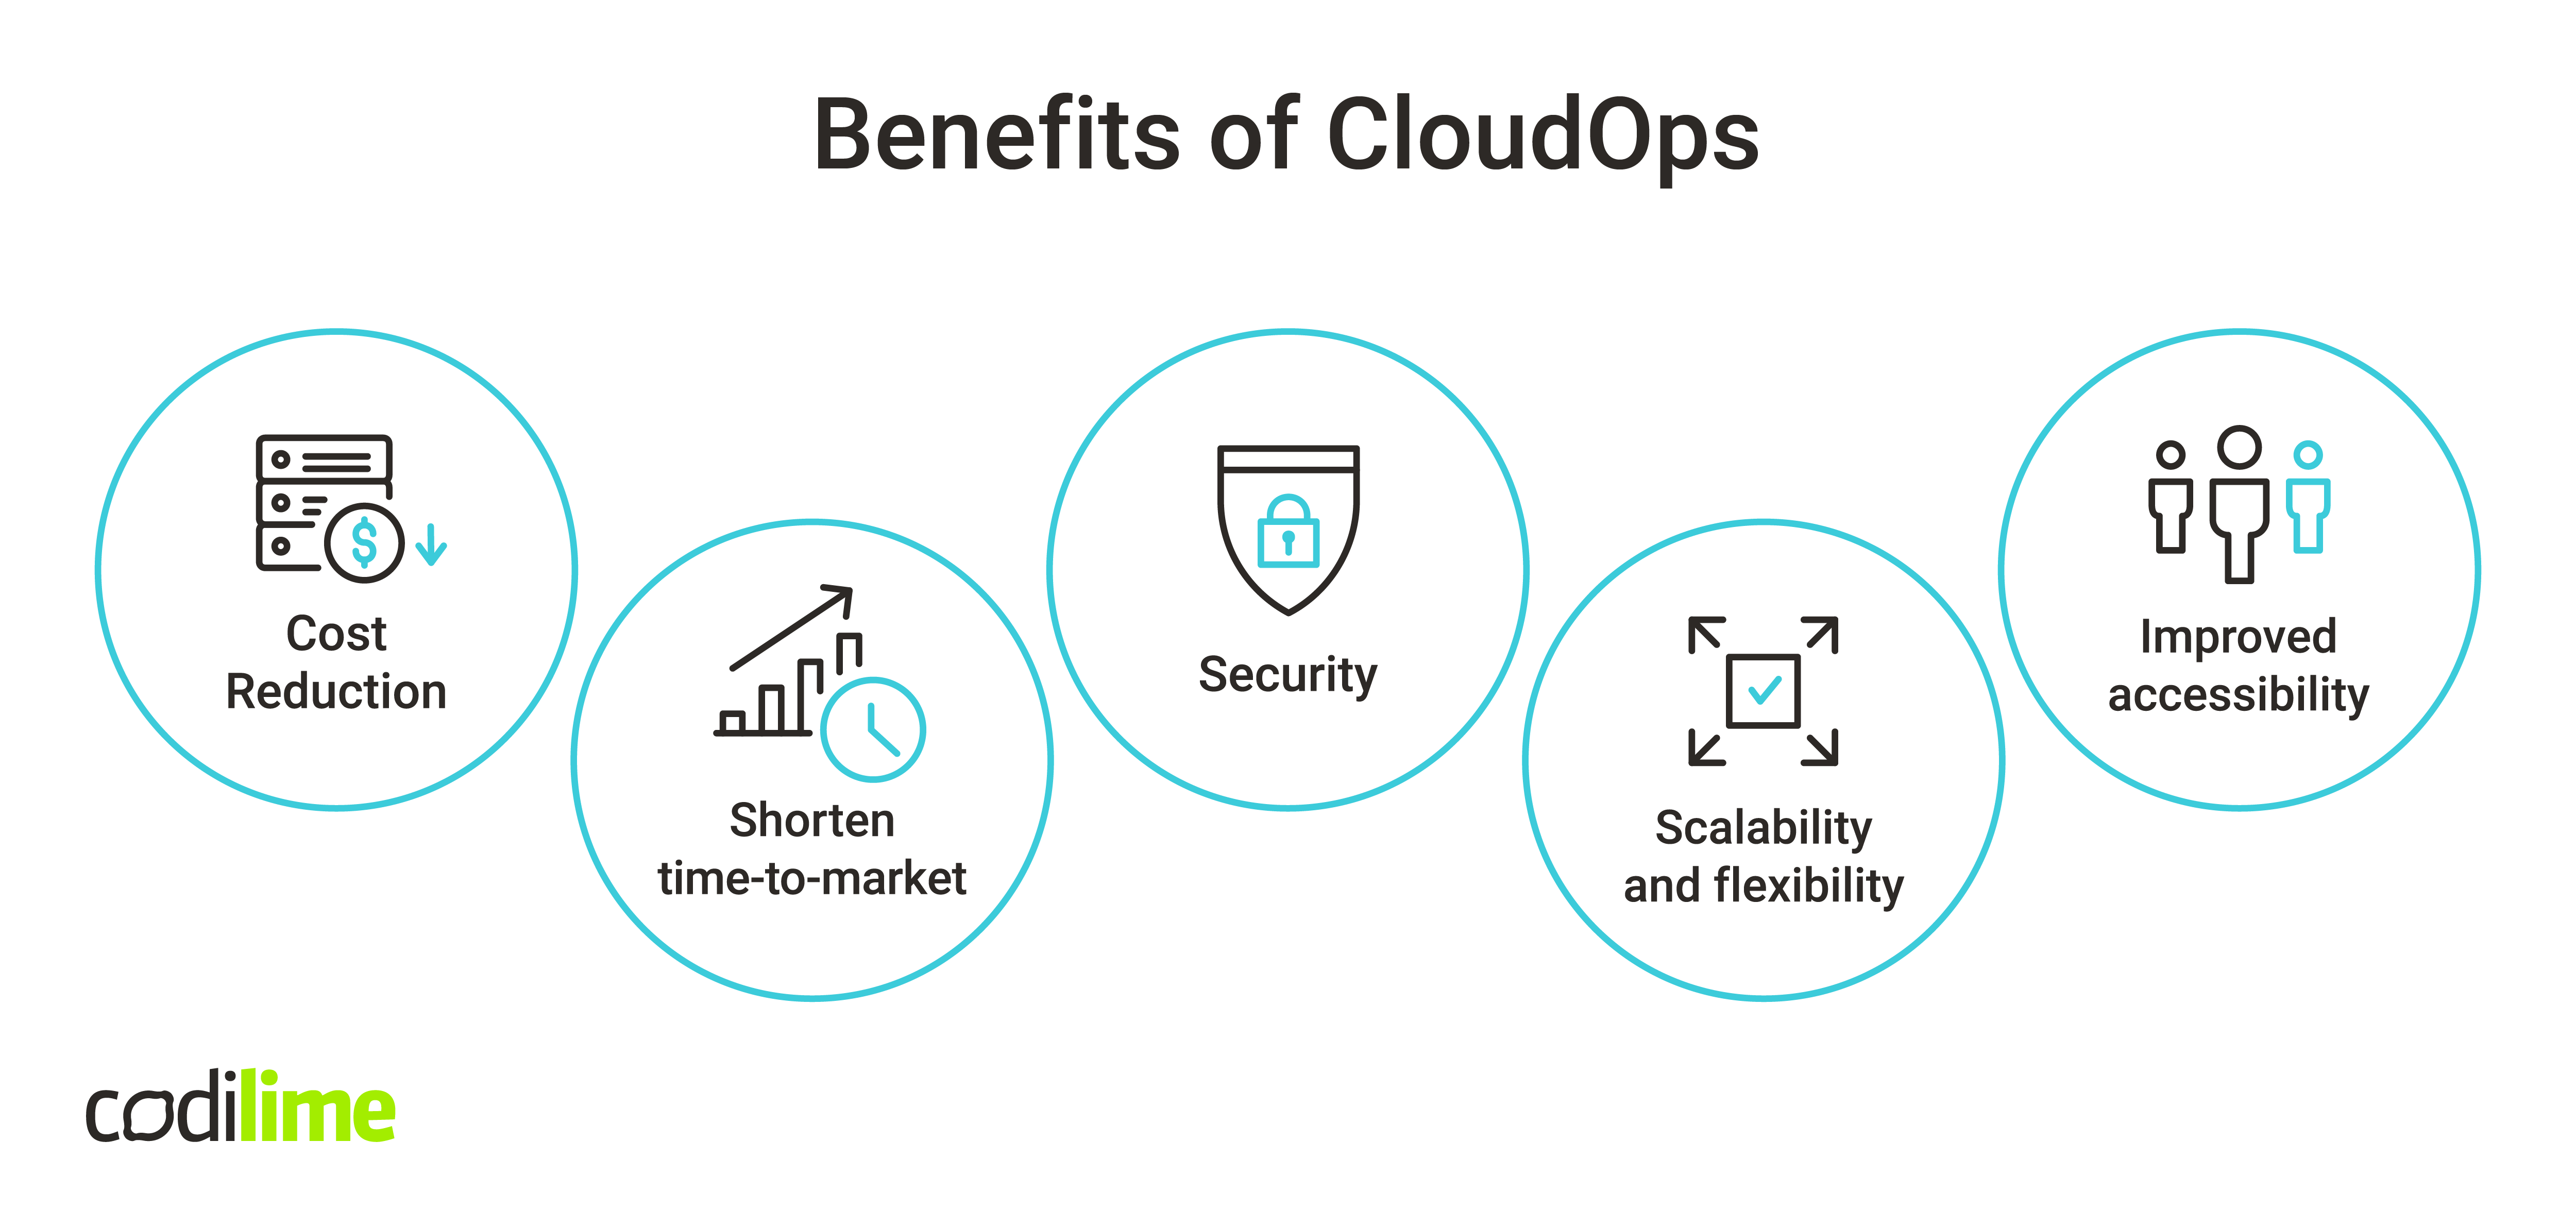  CloudOps benefits 